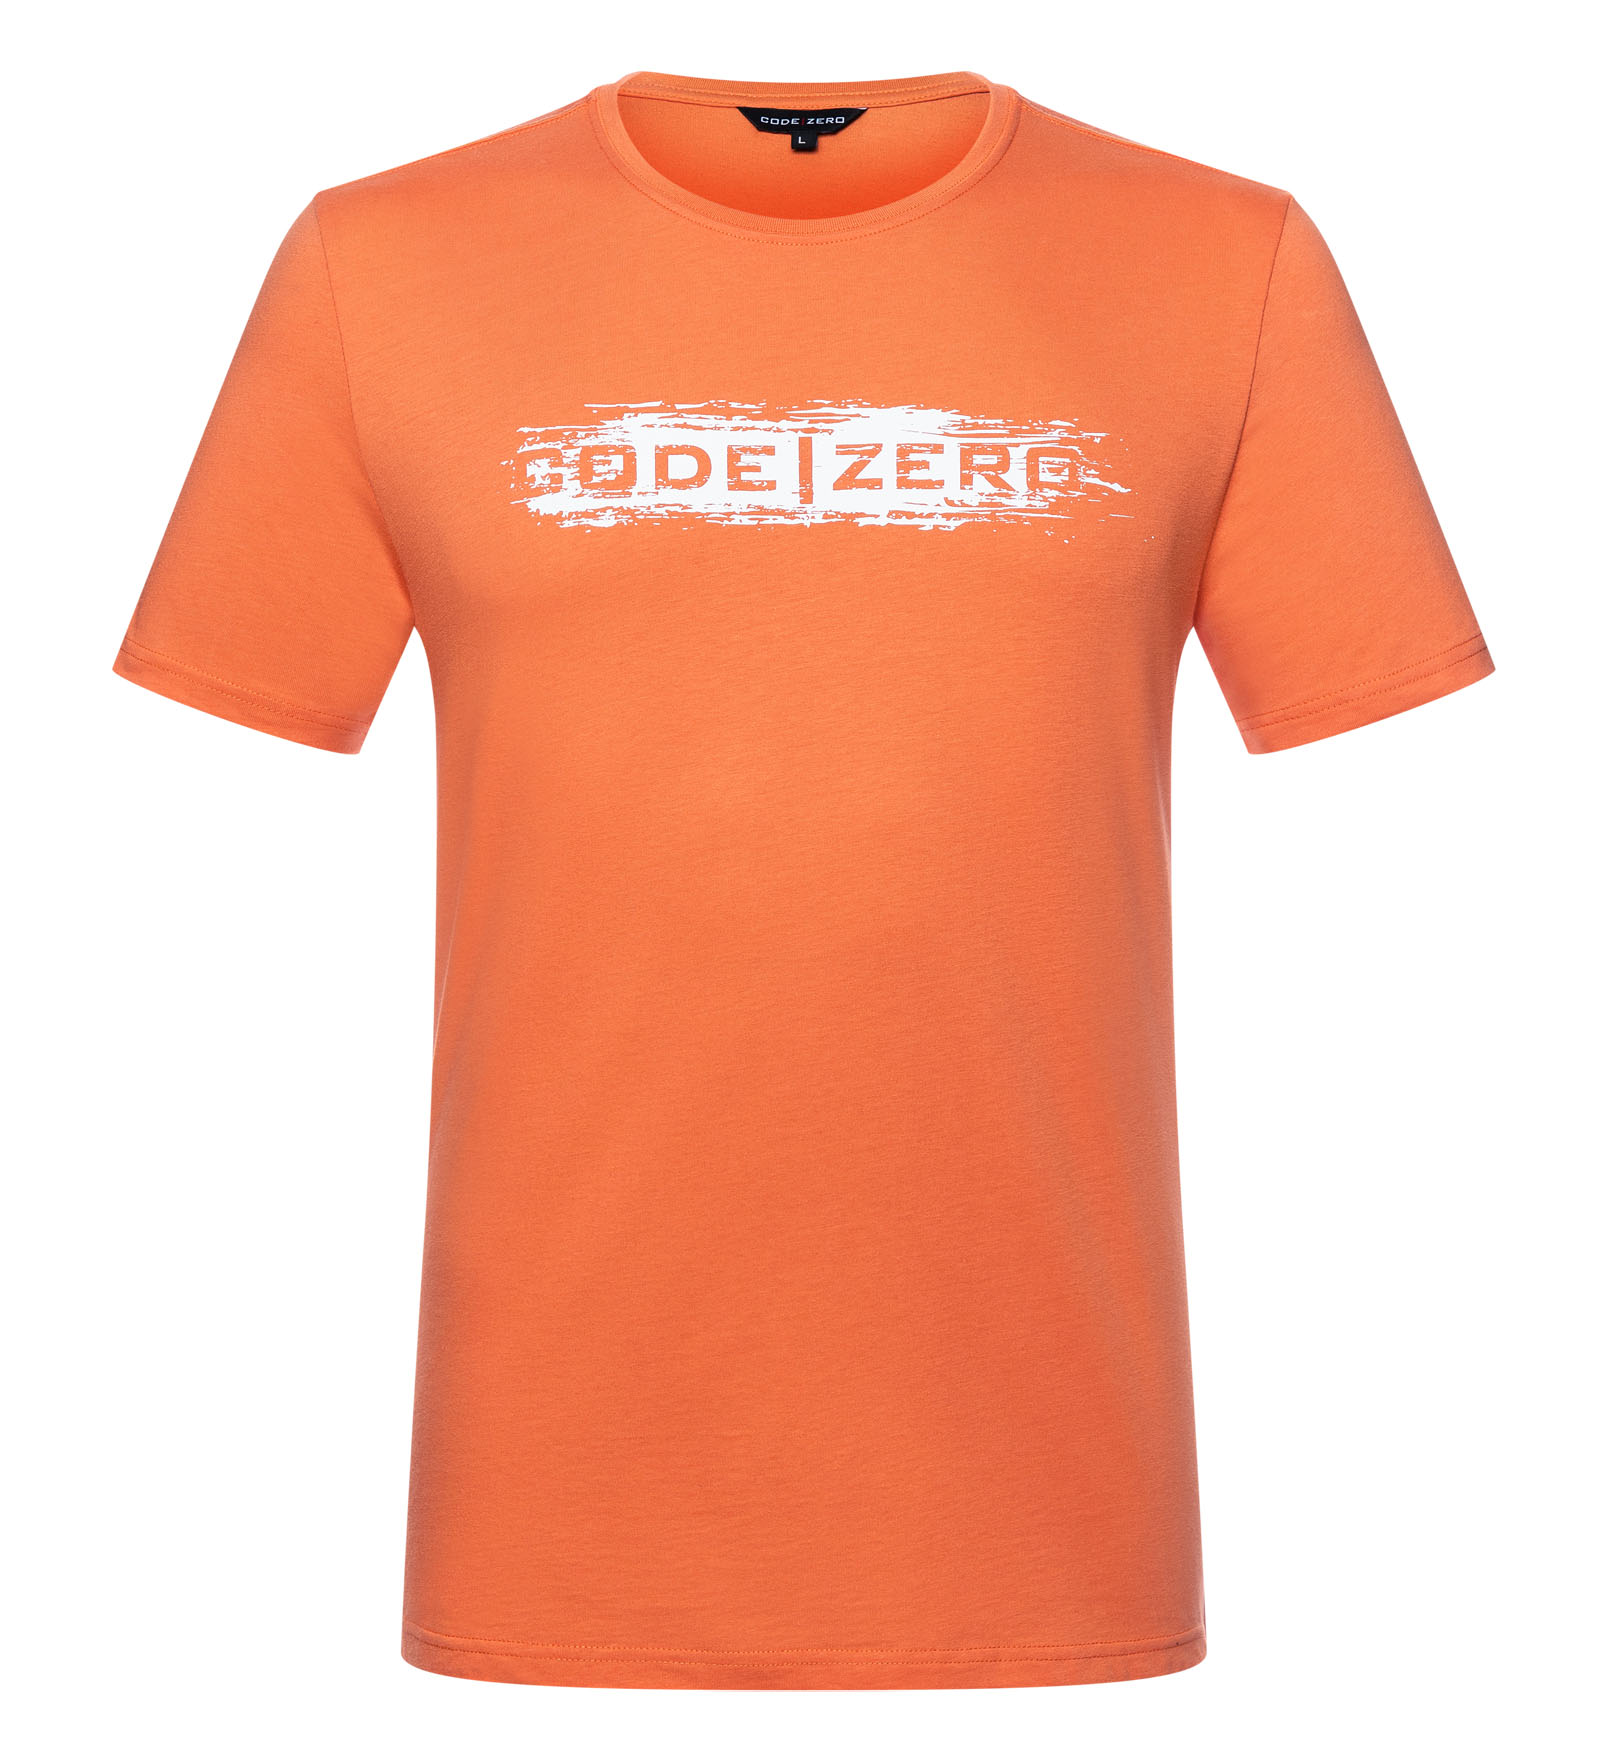 T-Shirt Herren Painted orange XXL CODE-ZERO von CODE-ZERO